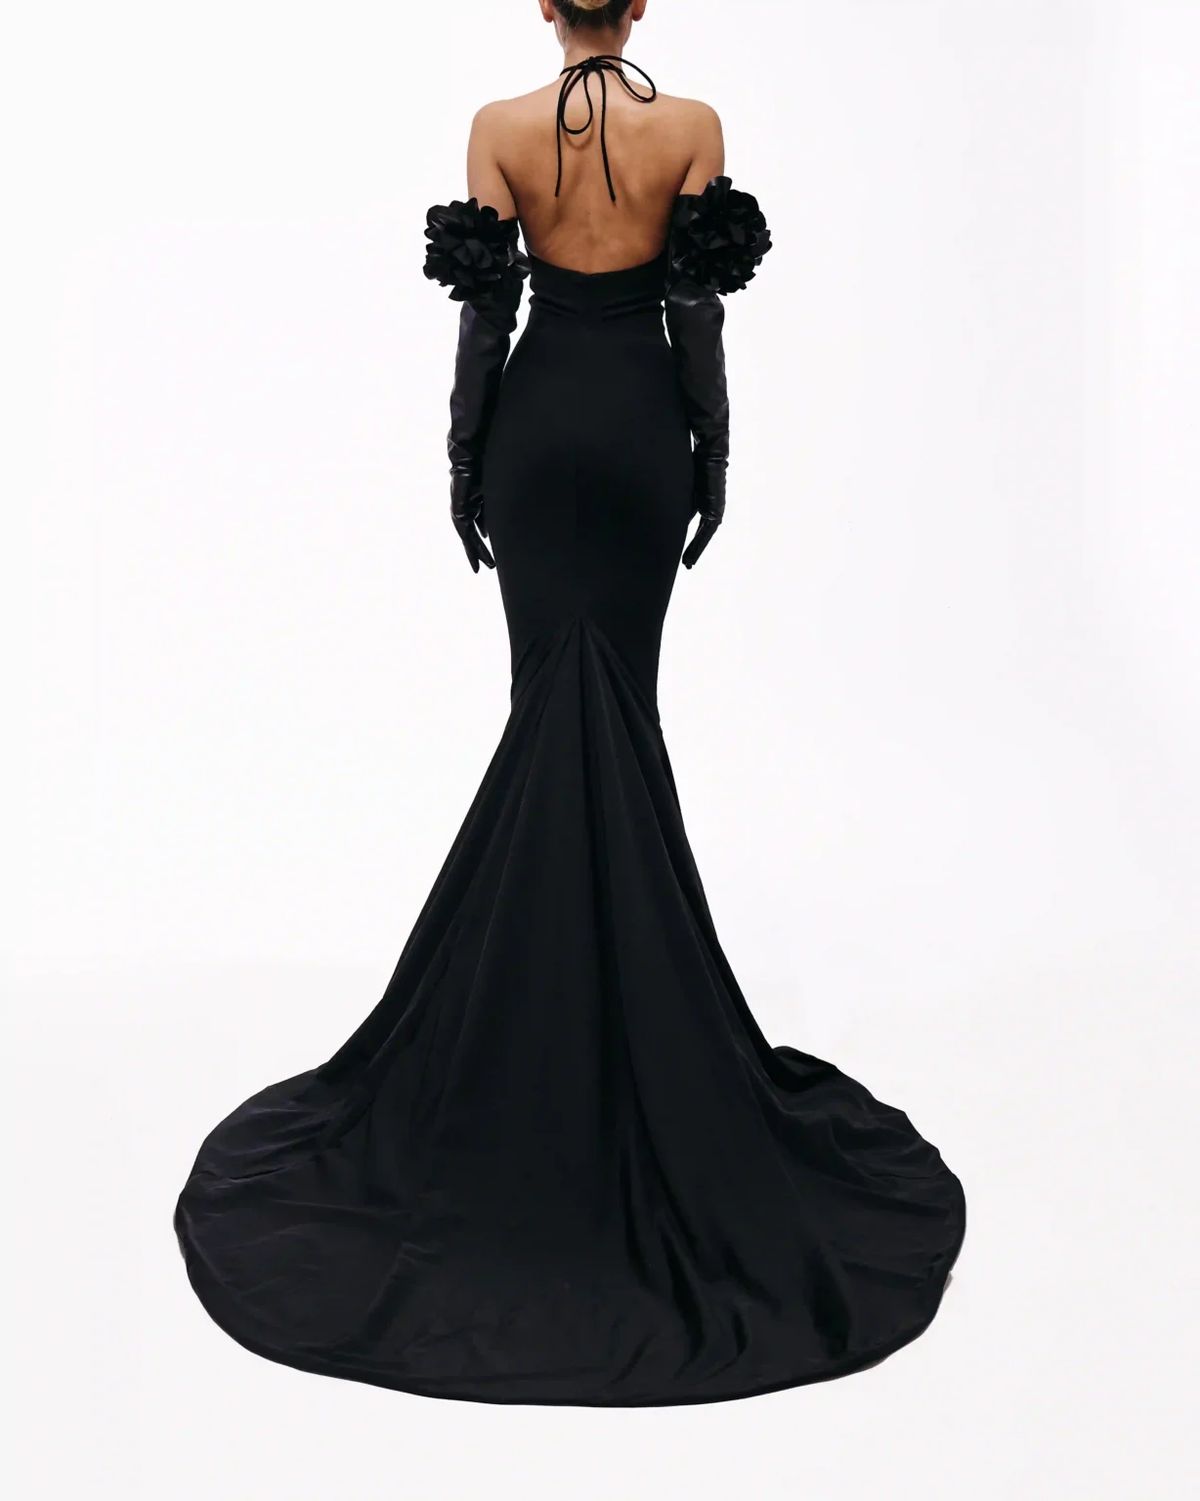 Style euphoria-24-10 Valdrin Sahiti Size XS Pageant Black Mermaid Dress on Queenly